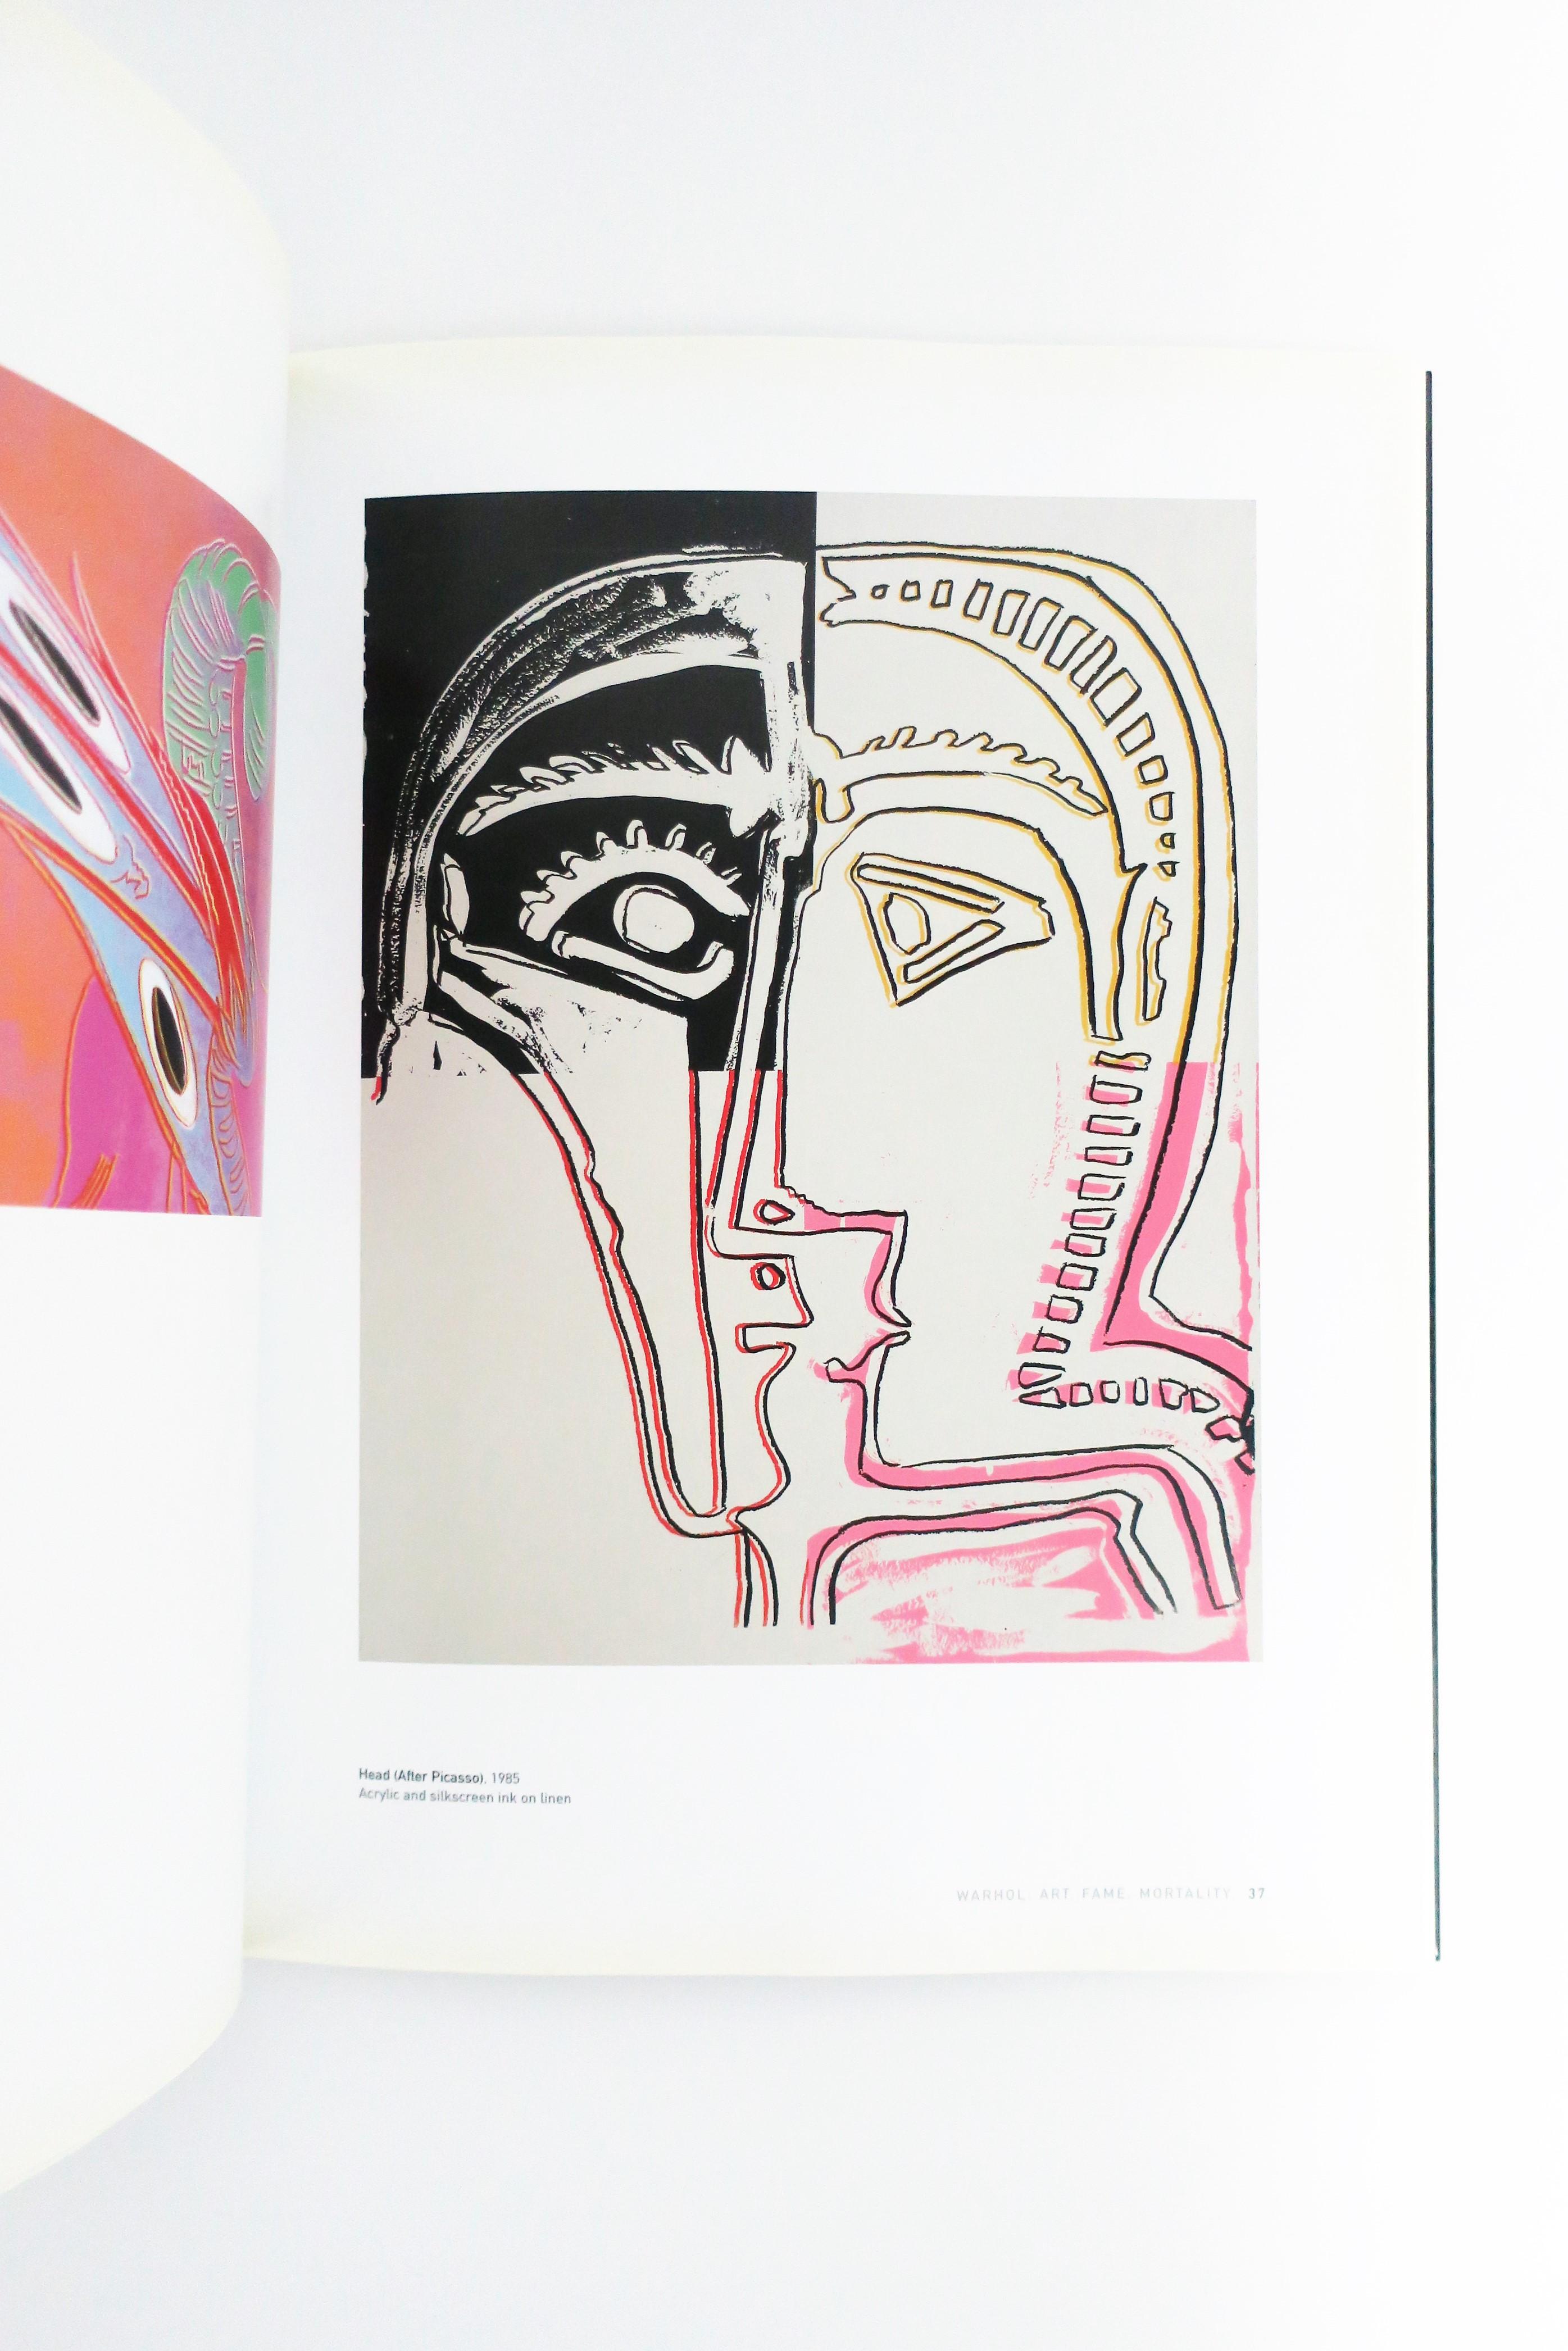 Warhol Art, Fame, Mortality, Exhibition Book 2